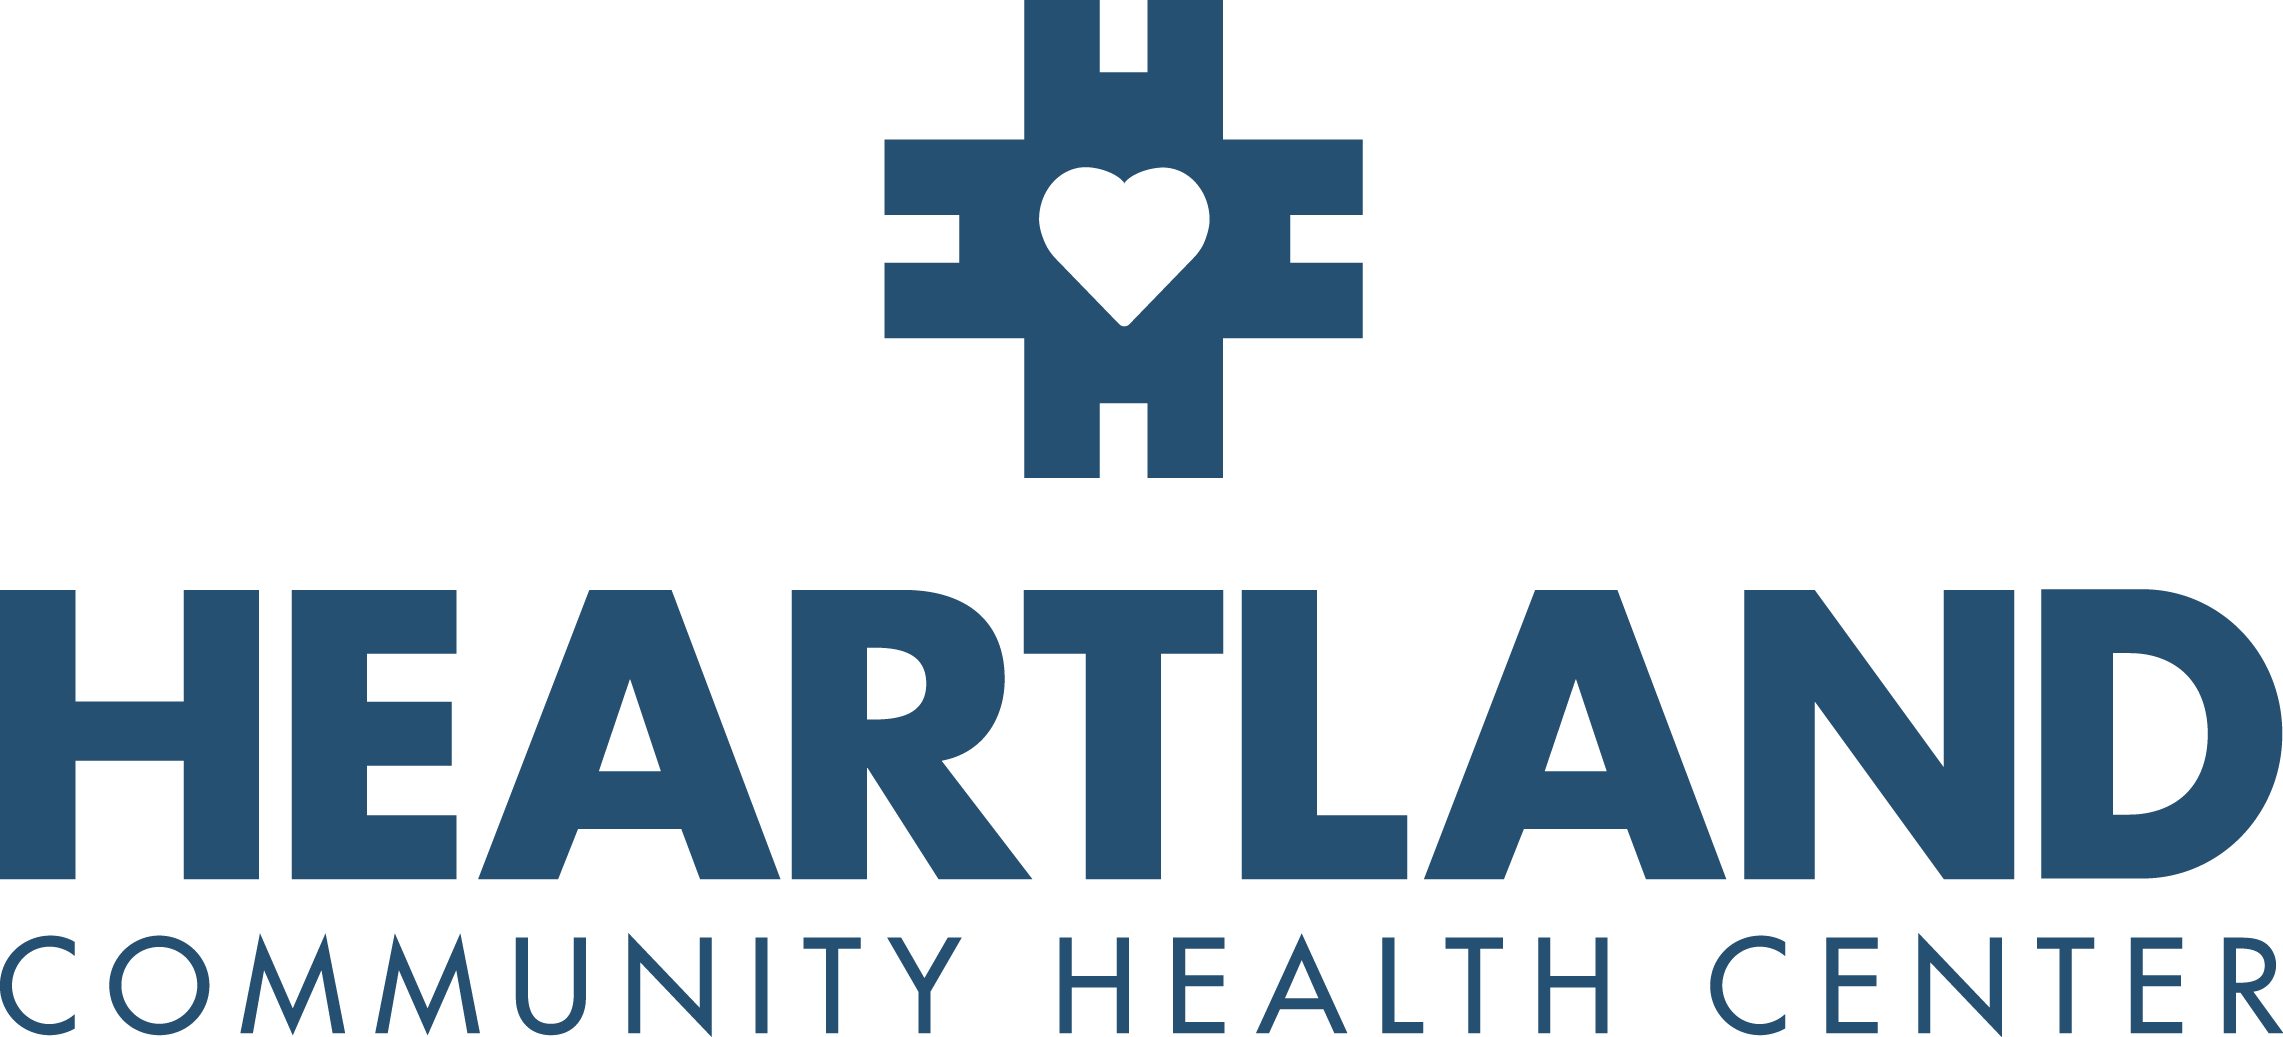 Heartland Logo - heartland logo - Heartland Community Health Center